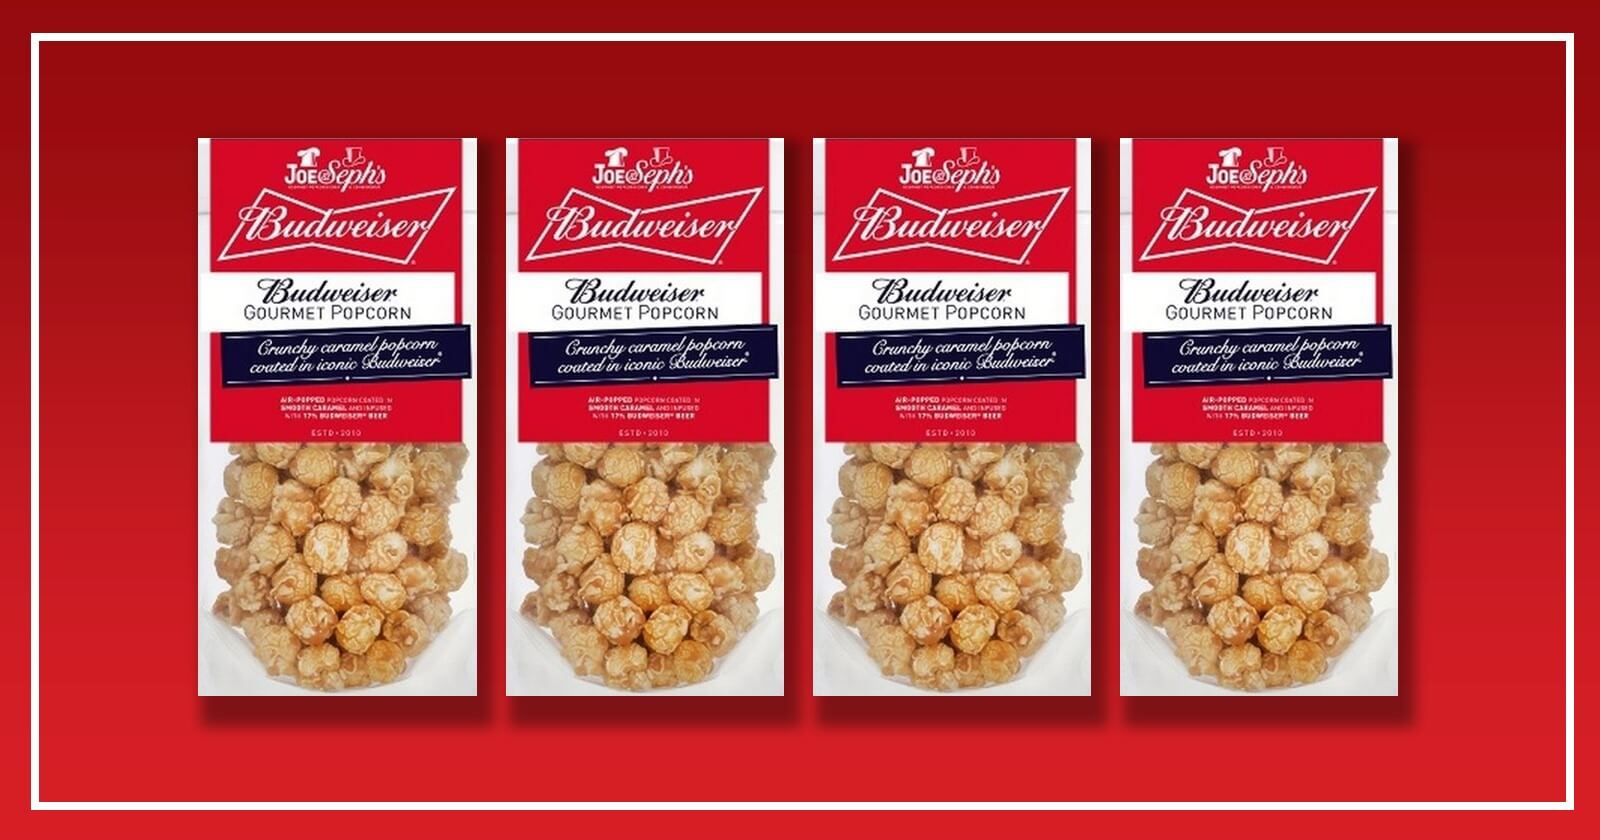 Joe & Steph’s Launches Budweiser Popcorn image